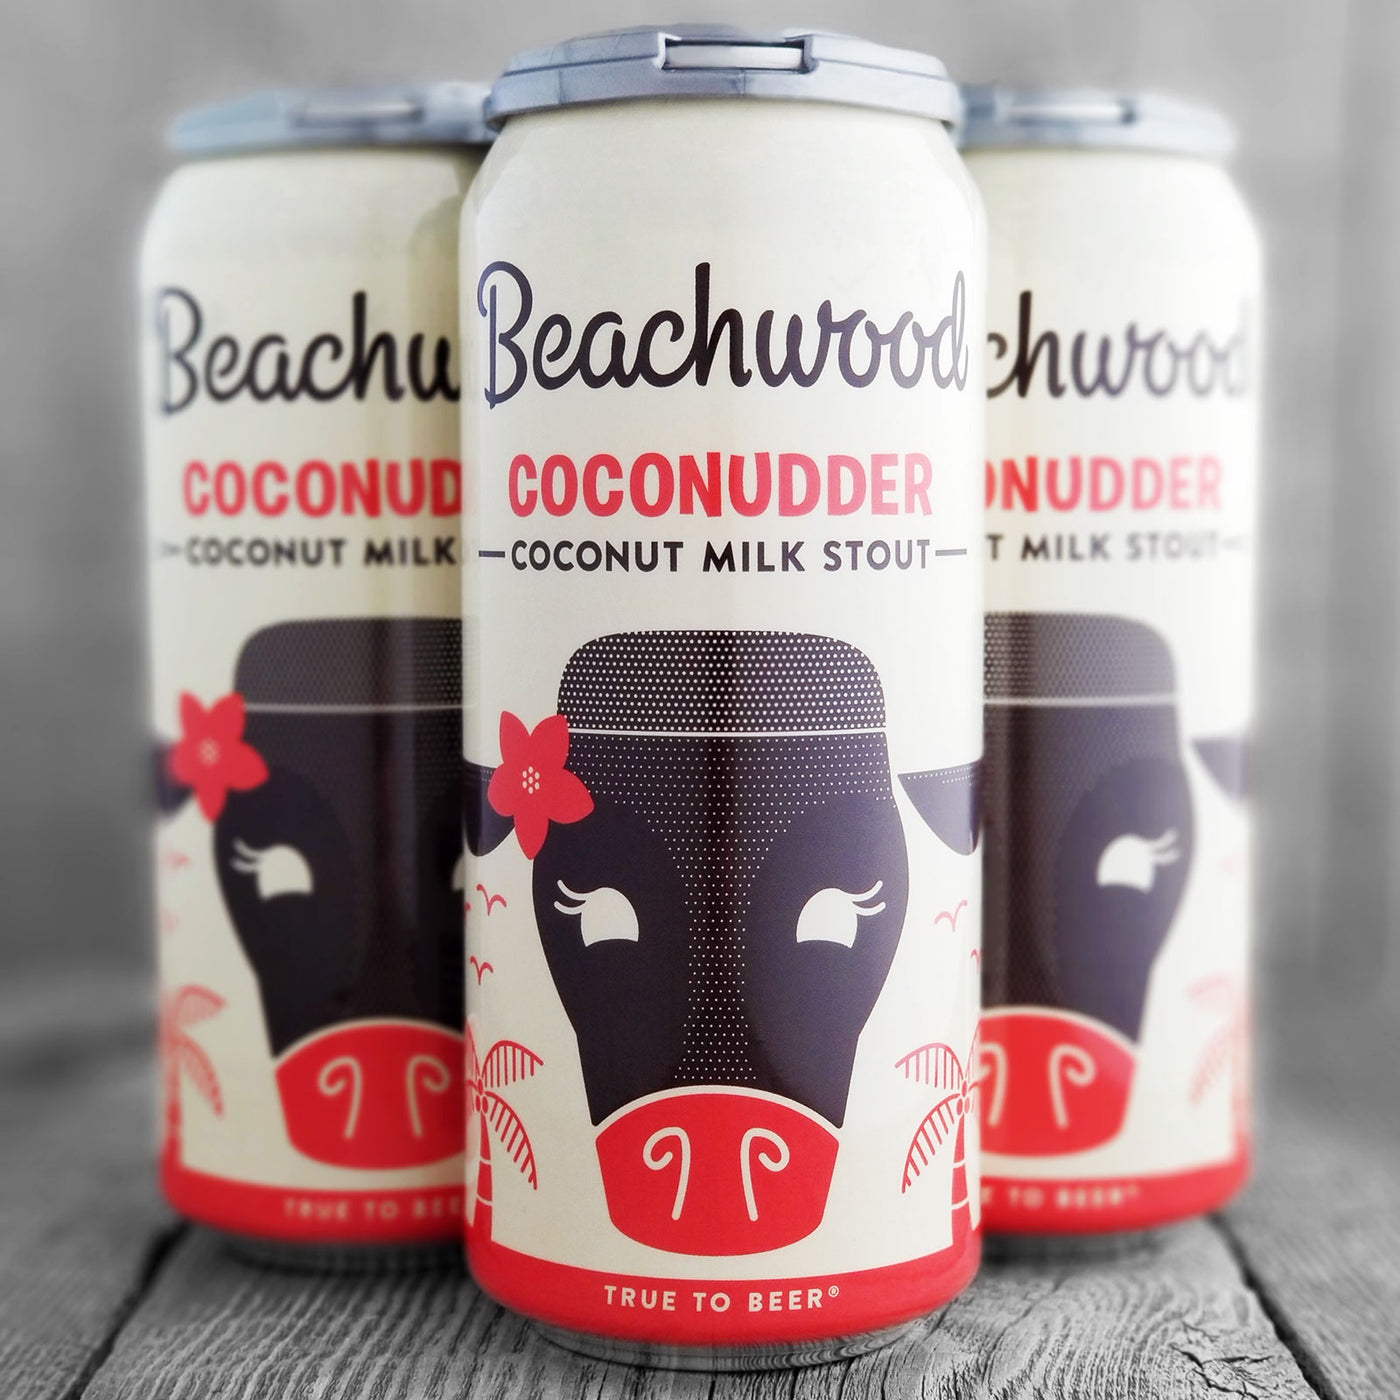 Beachwood Coconudder